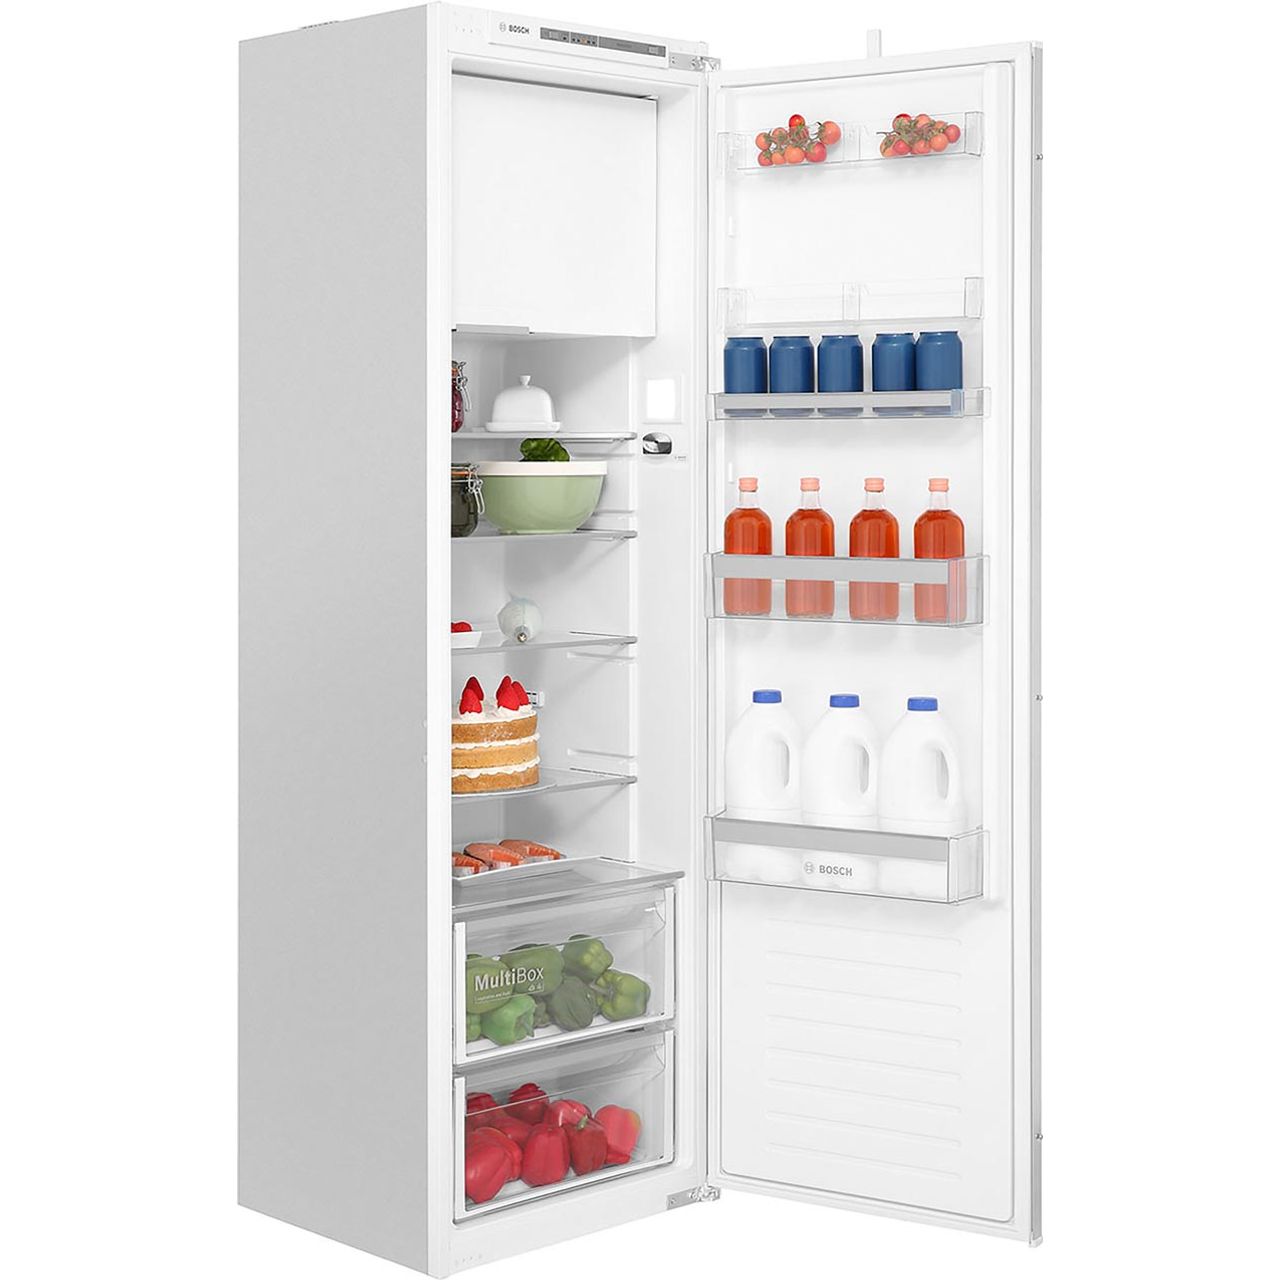 Bosch Fridge Freezer Door Shelf Tray Genuine Part Number 665519 Amazon Co Uk Large Appliances